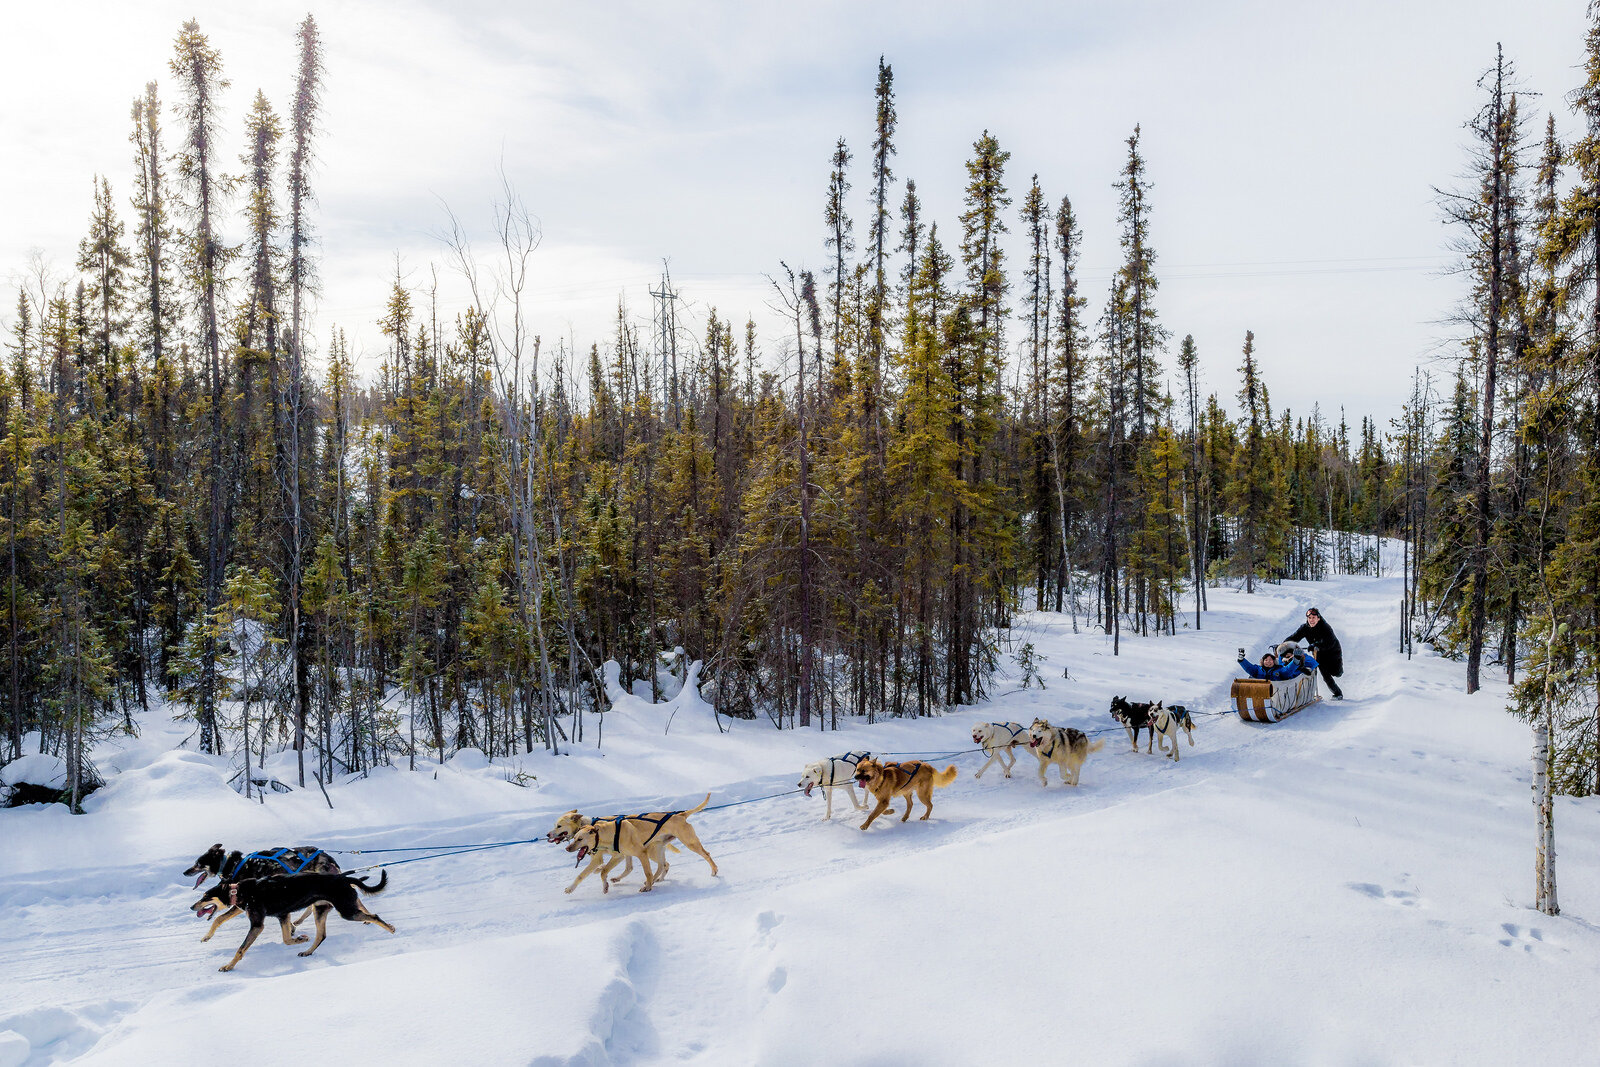 Aurora-Village-Yellowknife-Northwest-Territories-Canada-Aurora-Borealis-Northern-lights-hero-winter-dog-sledding-credit-gawain-jones-1600 - Copy.jpg